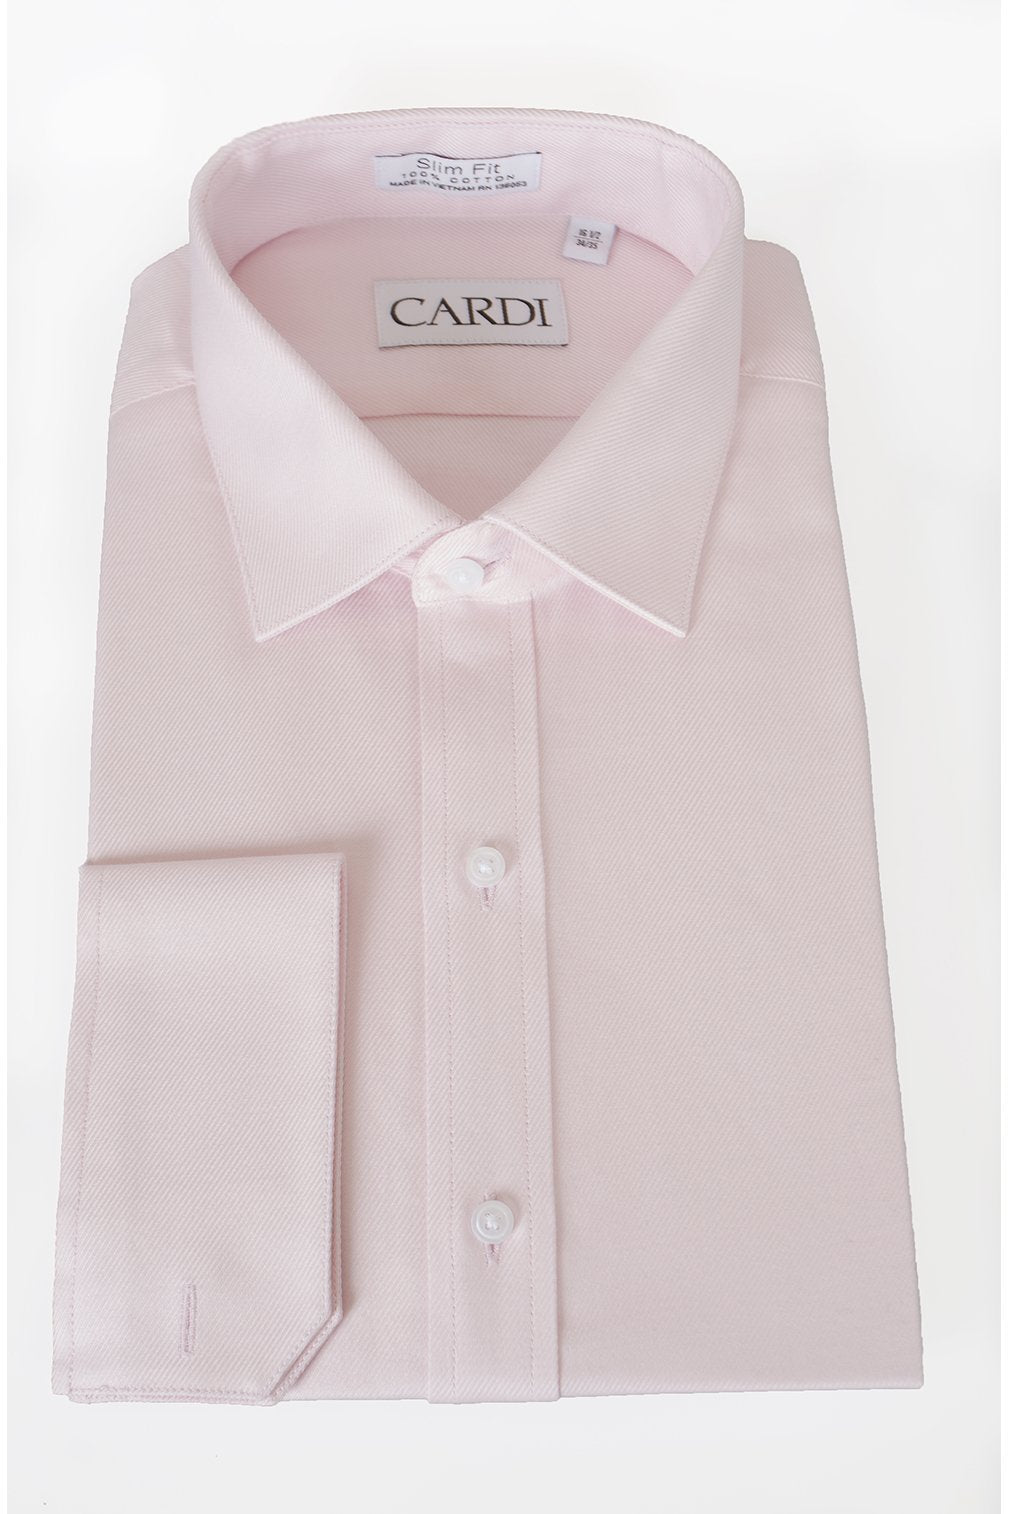 Jamison Pink Twill Spread Collar Dress Shirt - 14.5 / 32-33 